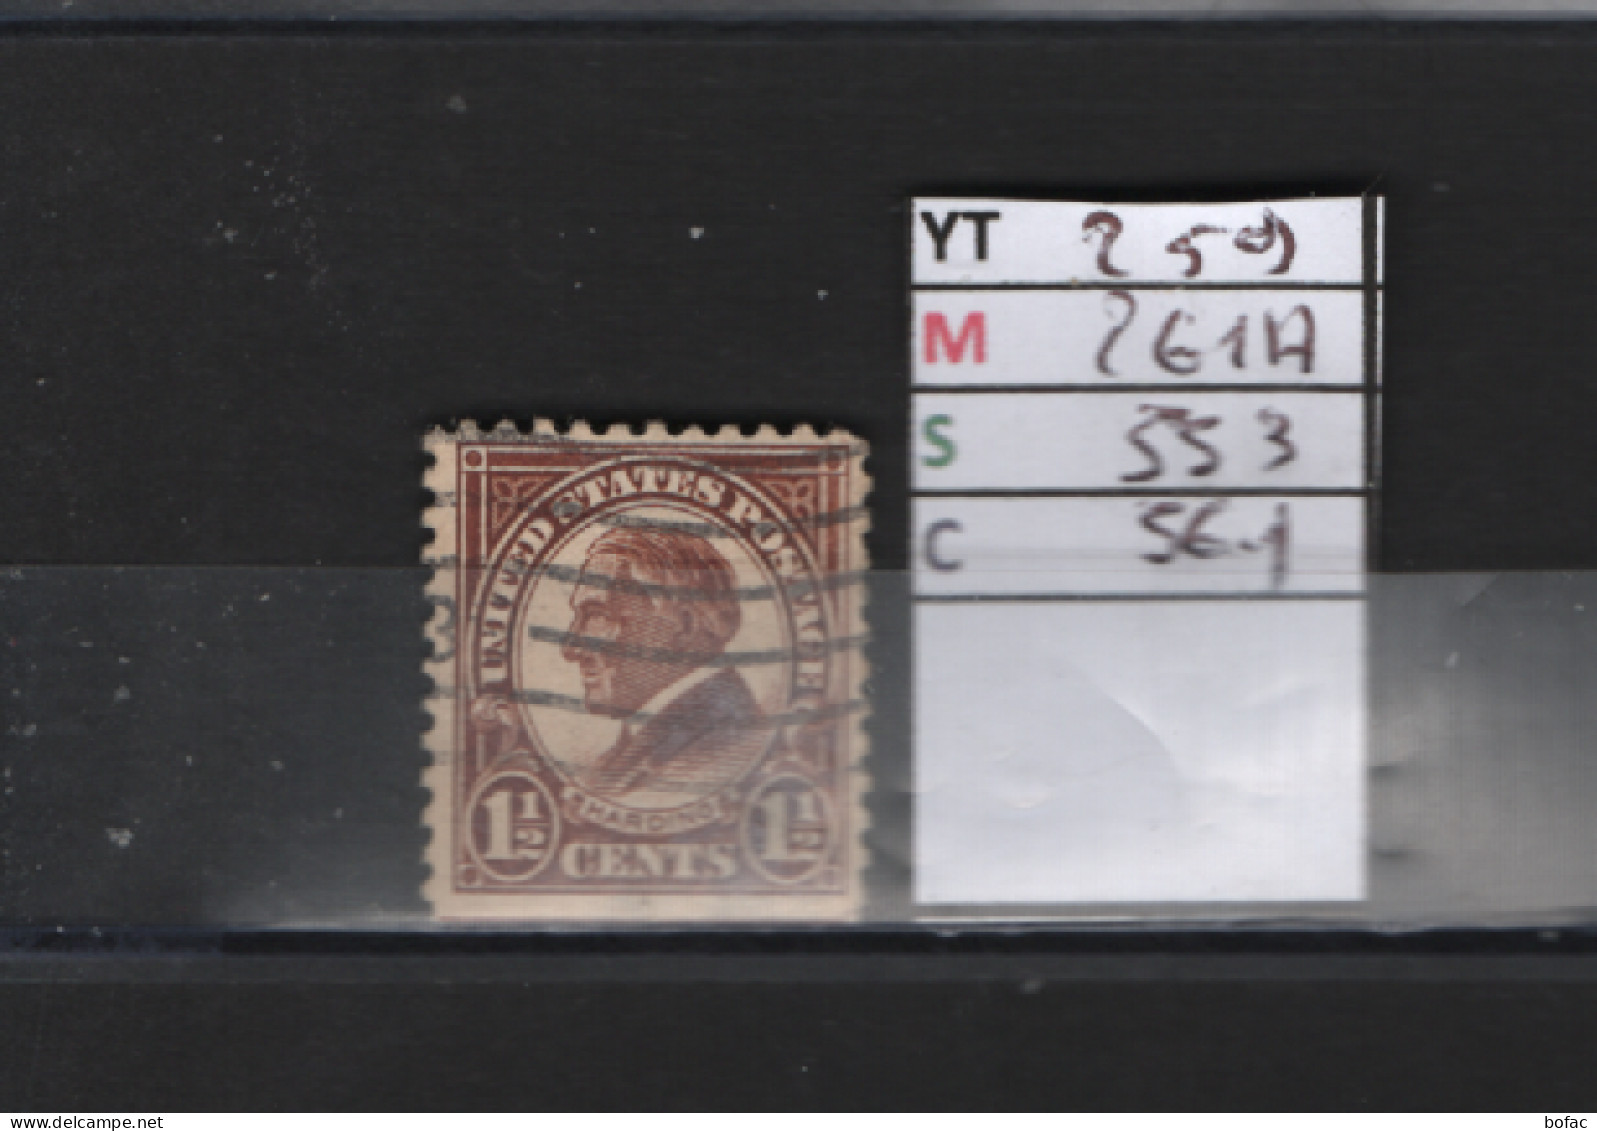 PRIX FIXE Obl  259 YT 261A MIC US553 SCOT US623 GIB W. G. Harding 1925 1931   Etats Unis 58/08 - Used Stamps